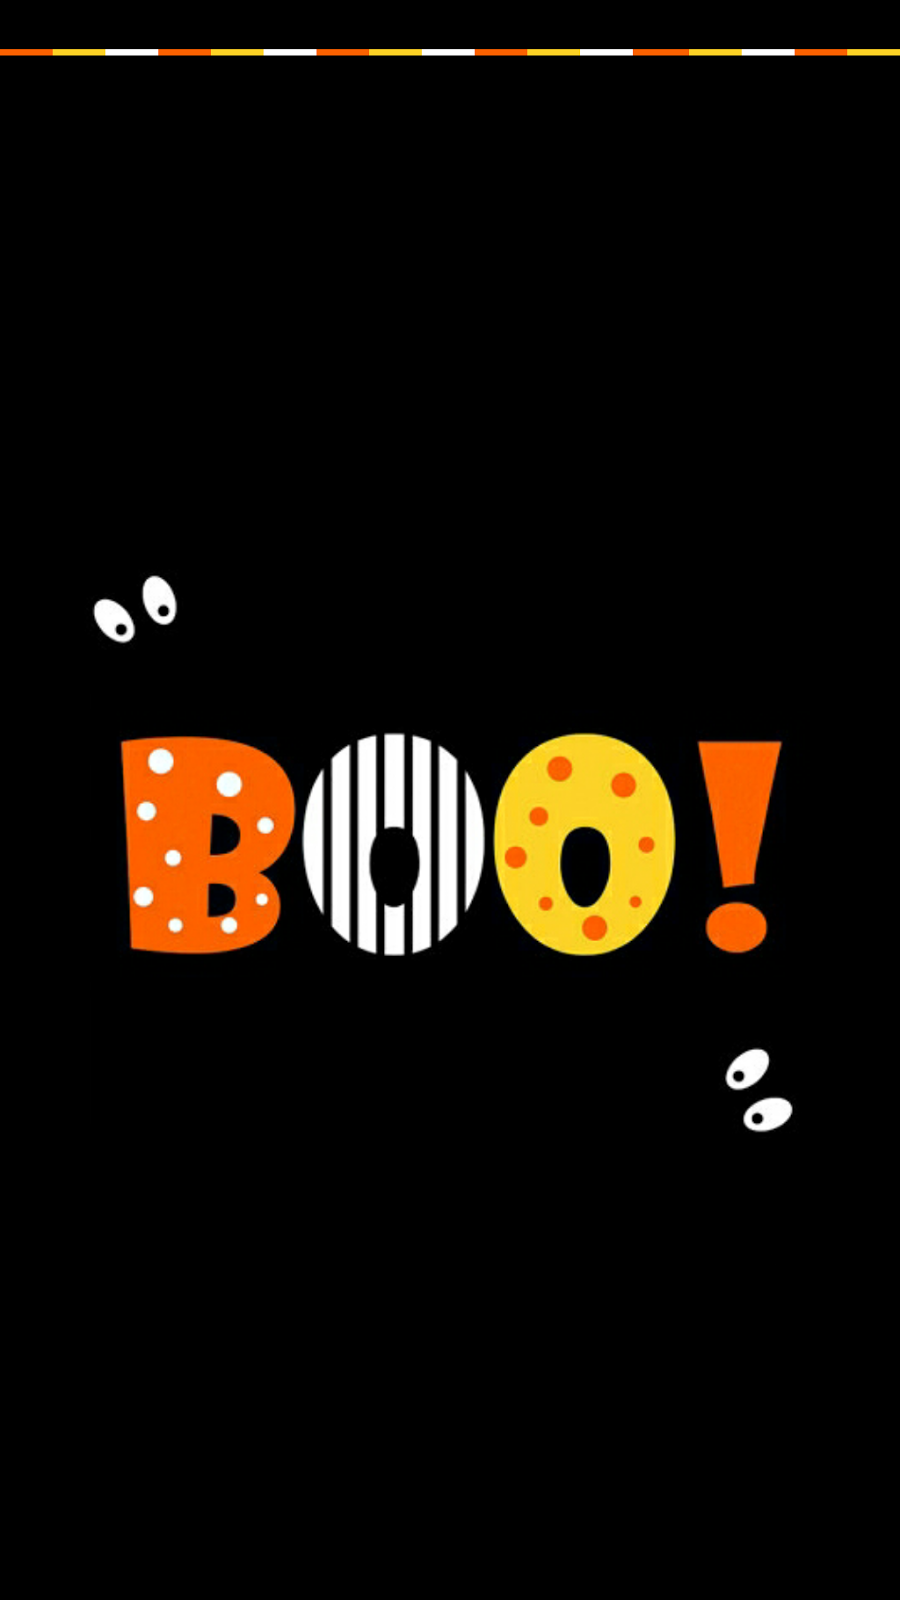 BOO! 👻 - #Halloween #fondos #backgrounds #wallpapers | Halloween